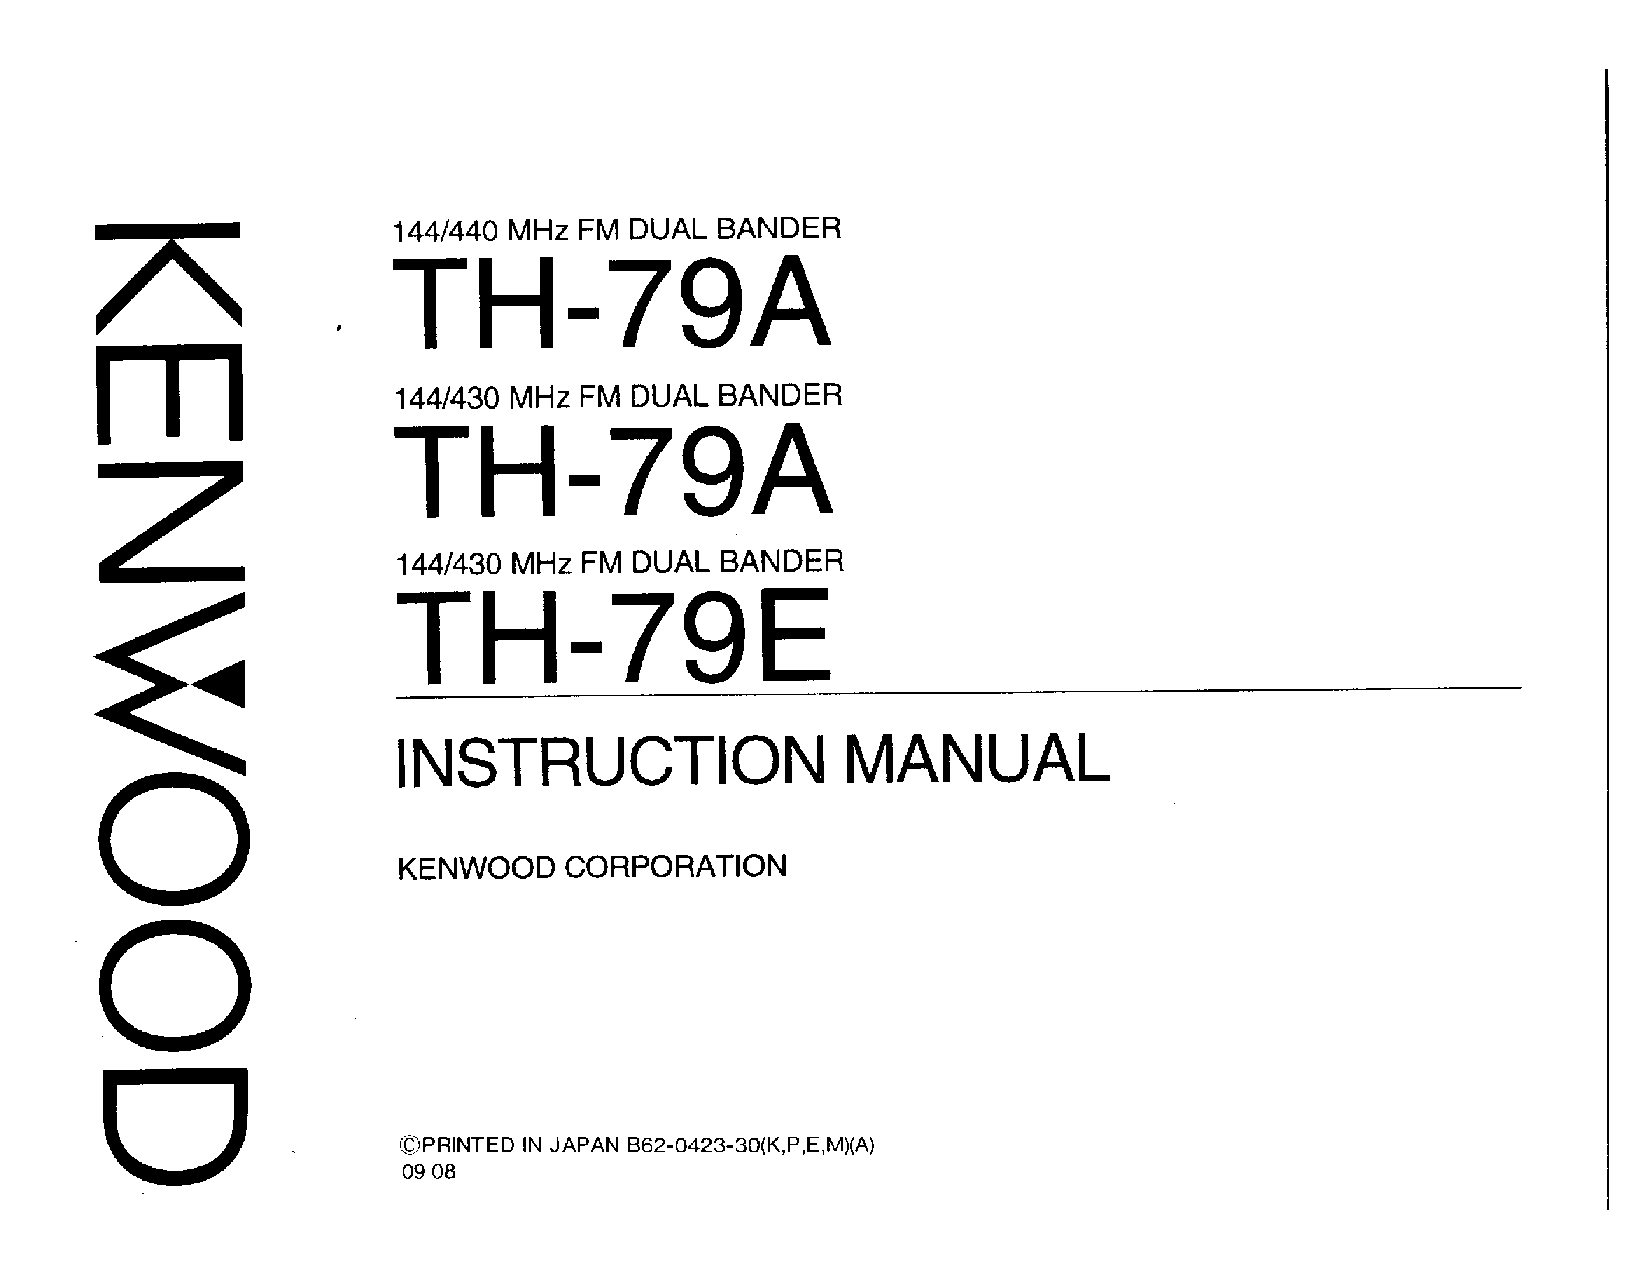 Kenwood TH-79A, TH-79E User Manual